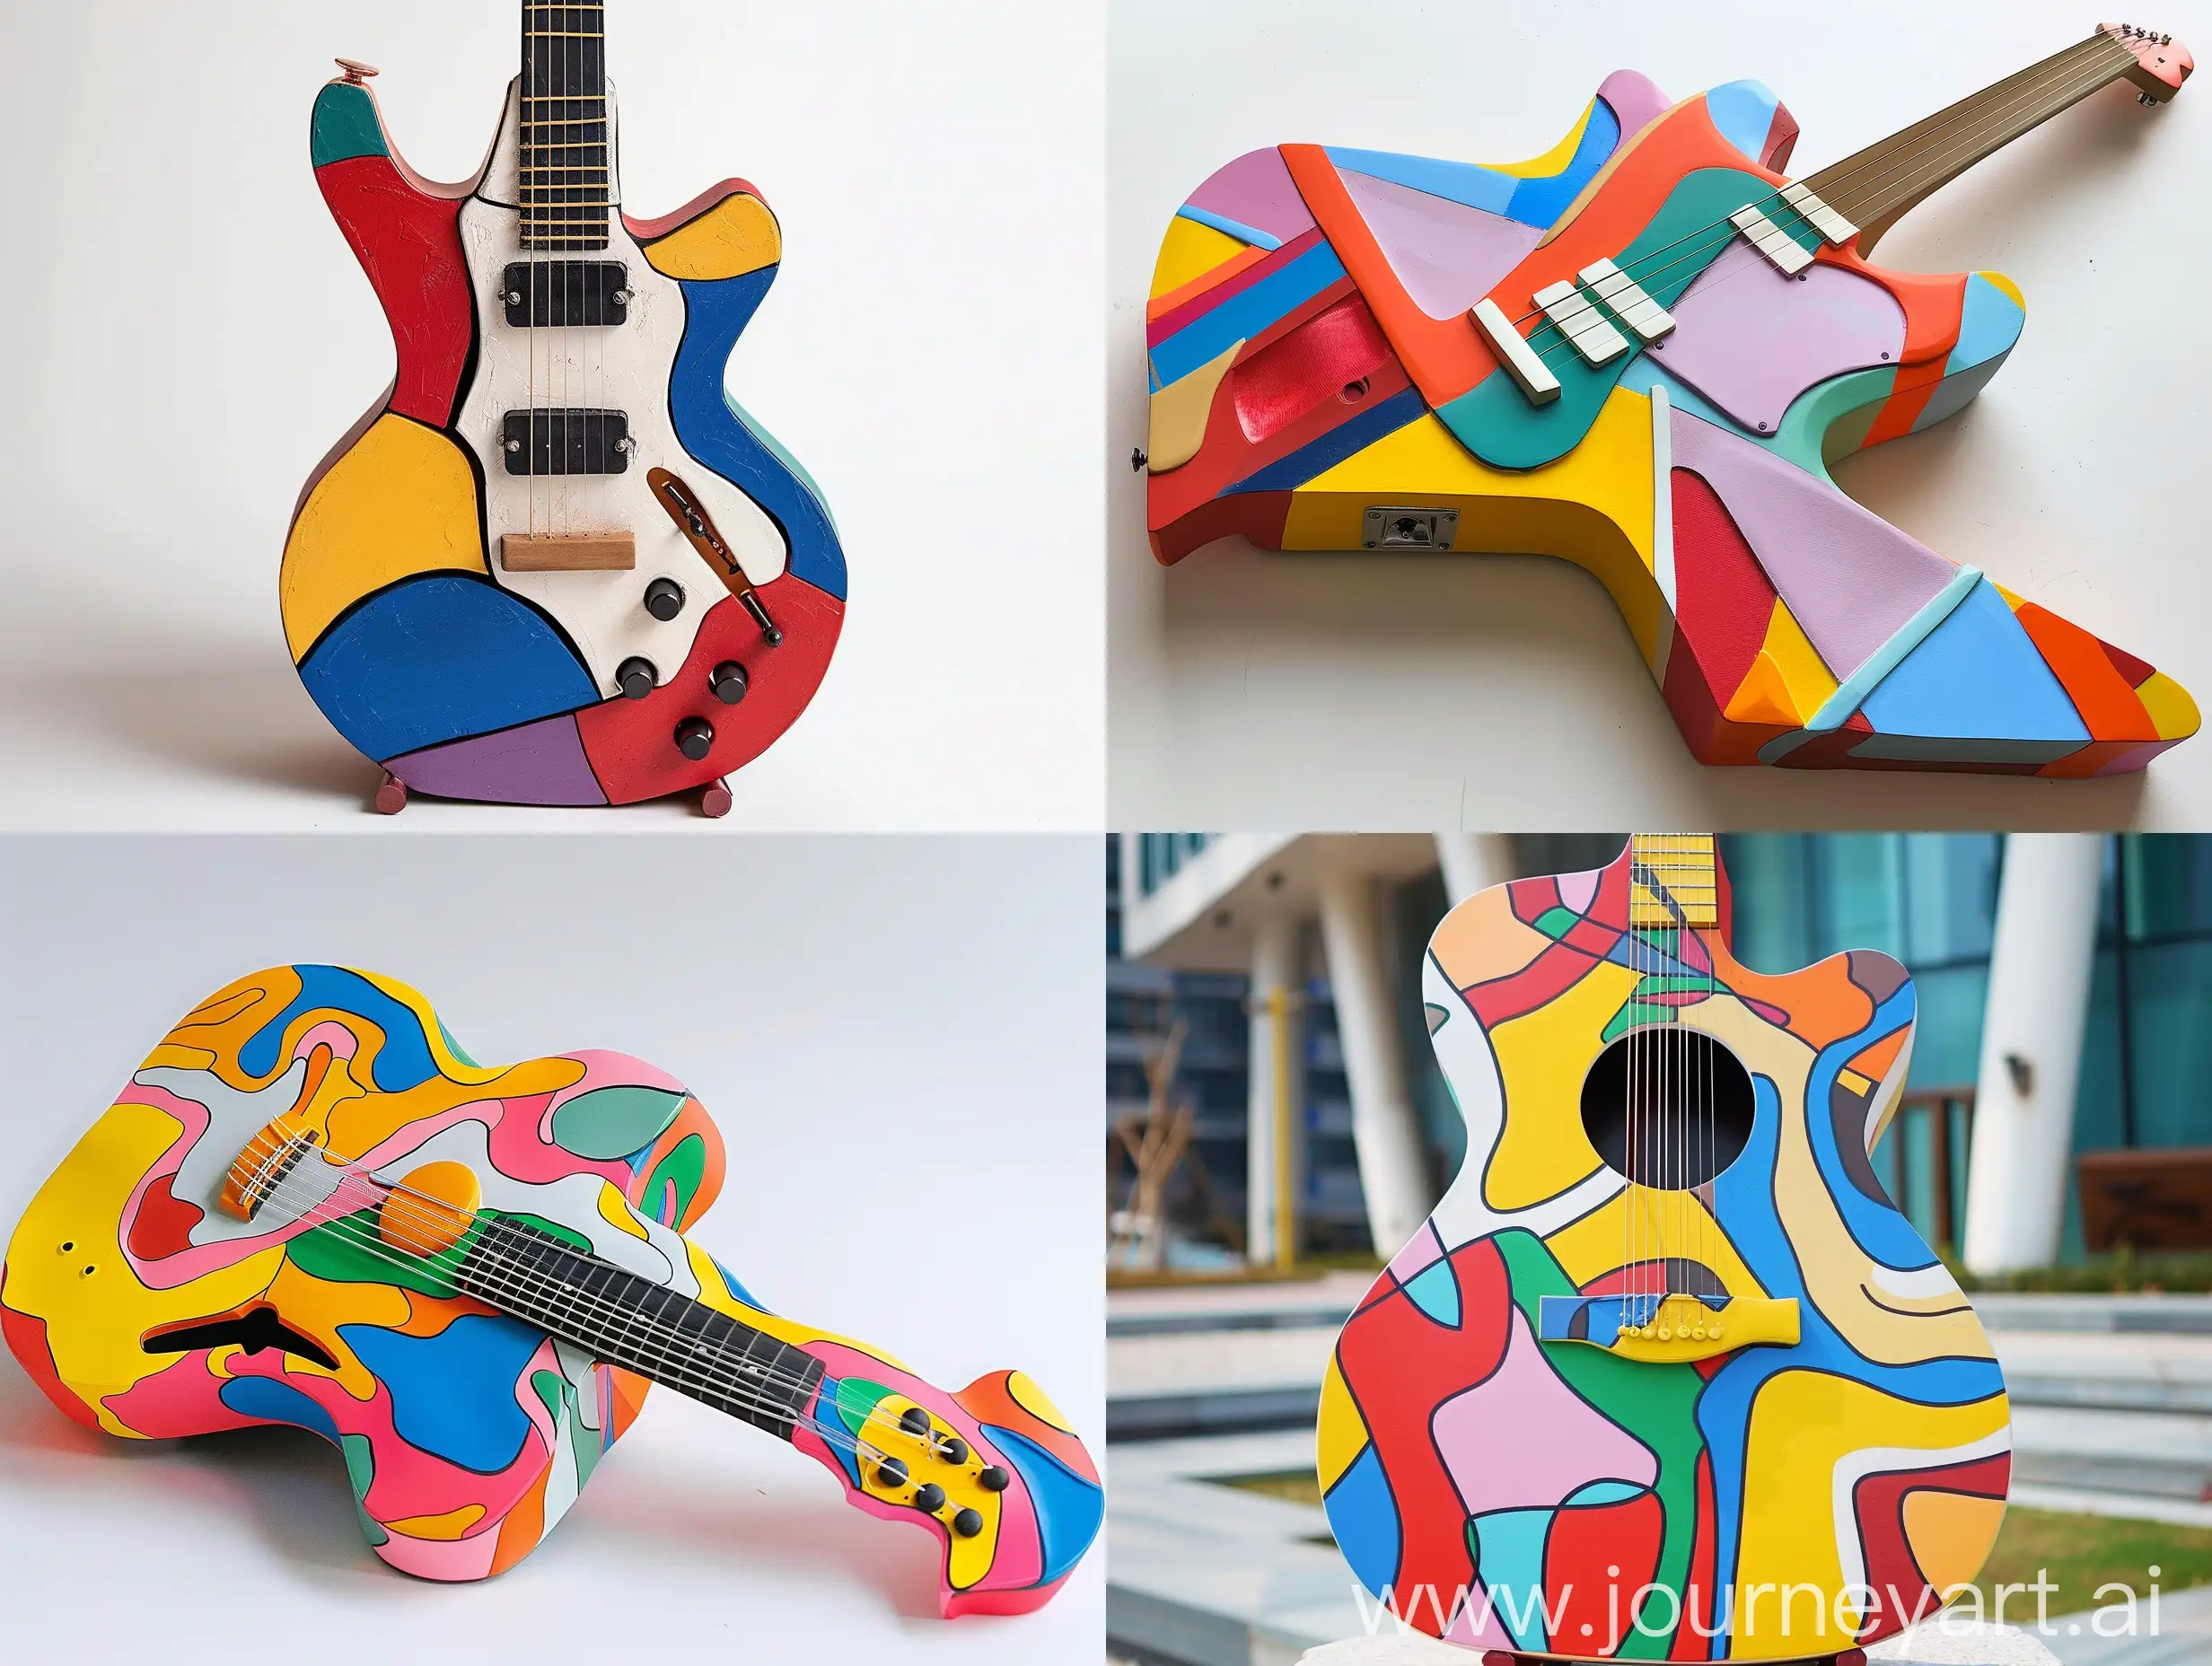 Vibrant-Minimalist-Guitar-Sculpture-by-Dynamic-Artist-Lee-Sangsoo